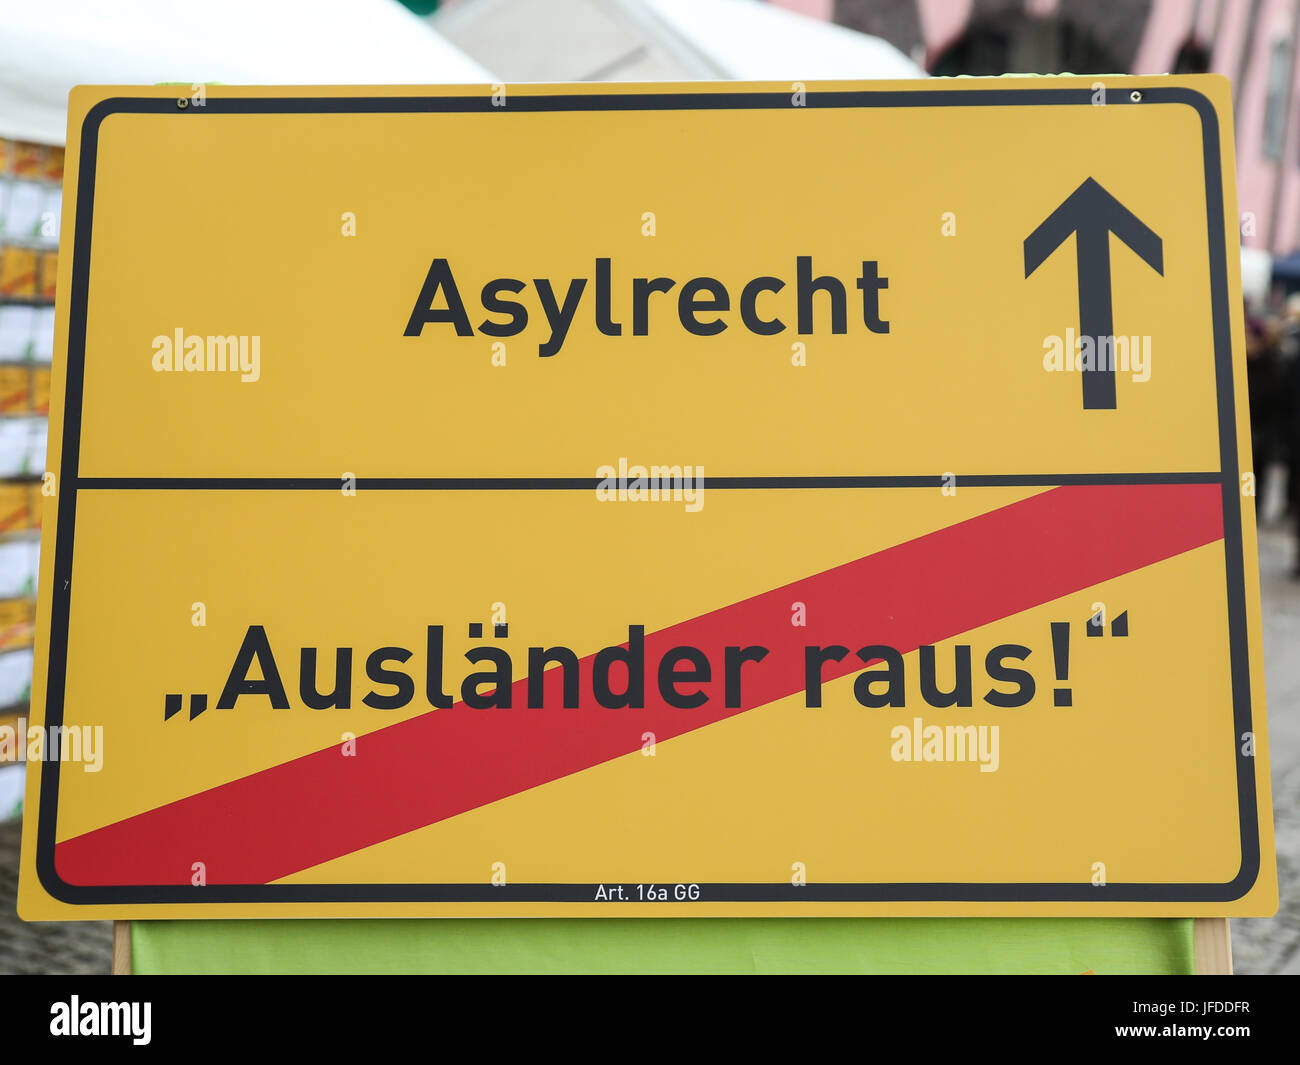 Asylum - Auslaender out! Stock Photo